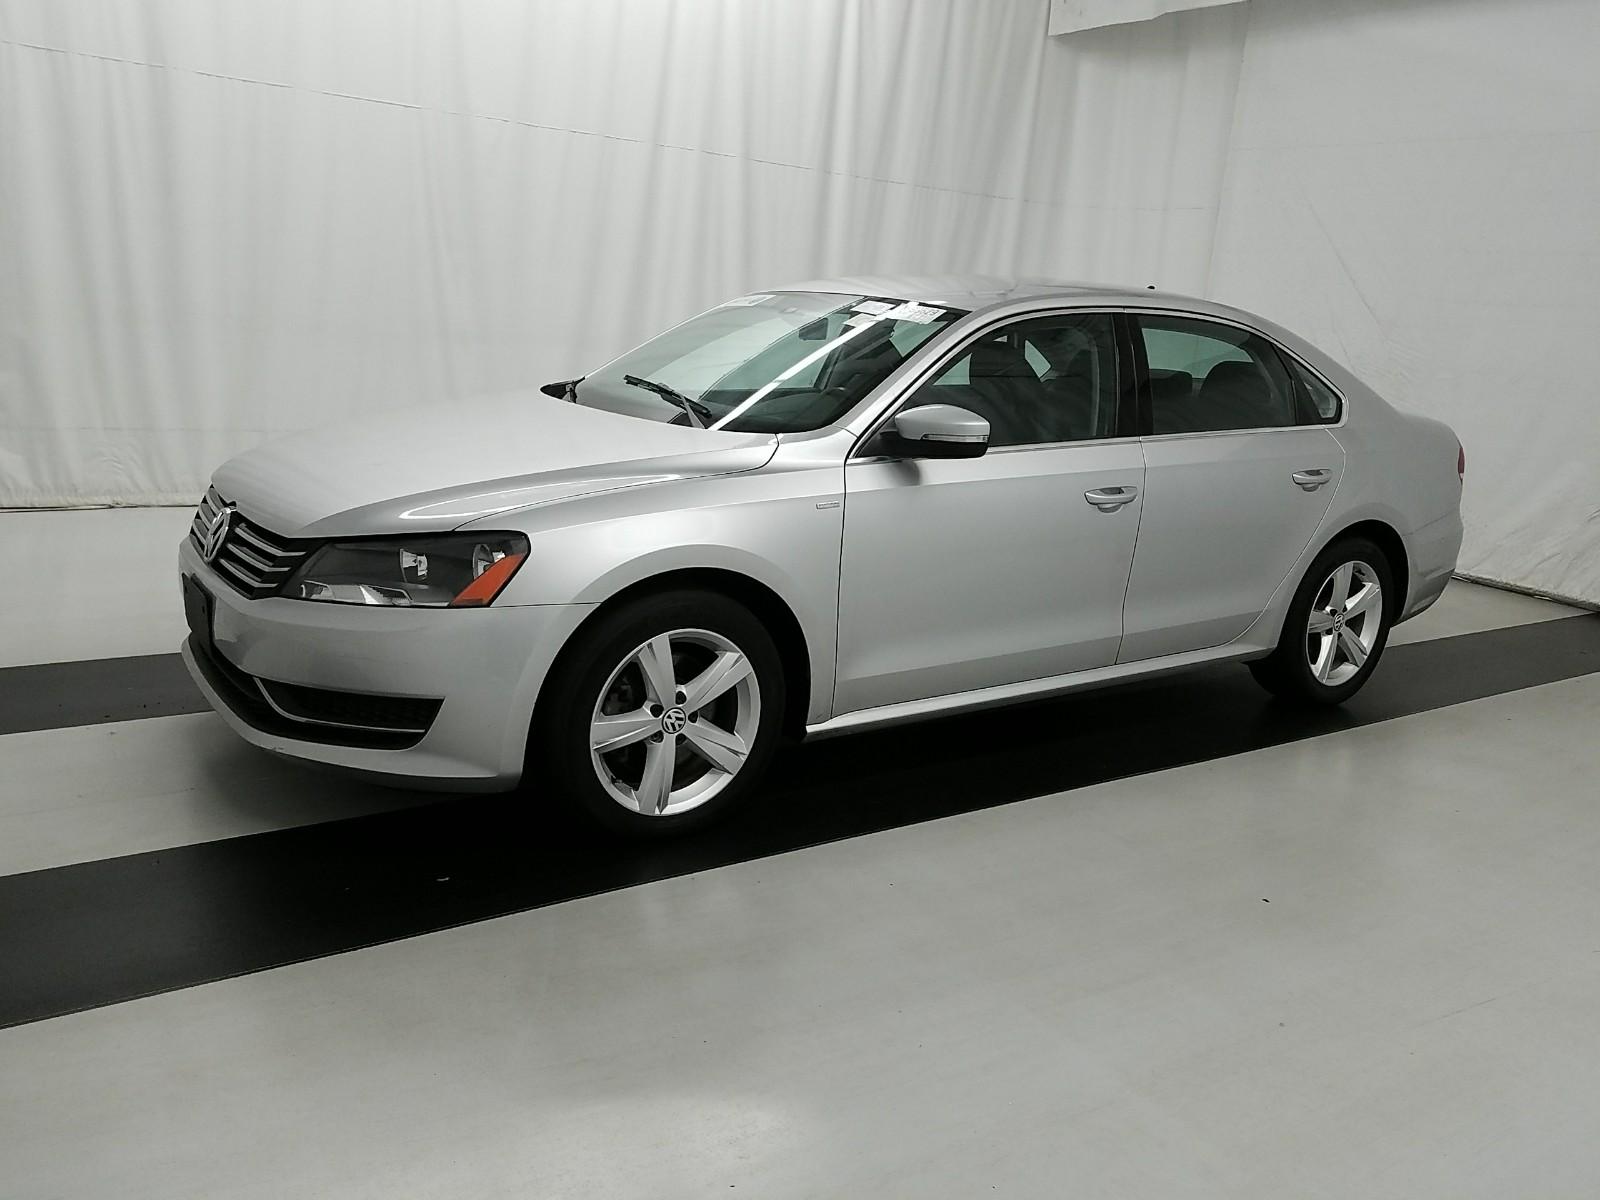 Used Car - 2014 Volkswagen Passat Wolfsburg Edition for Sale in Staten Island, NY